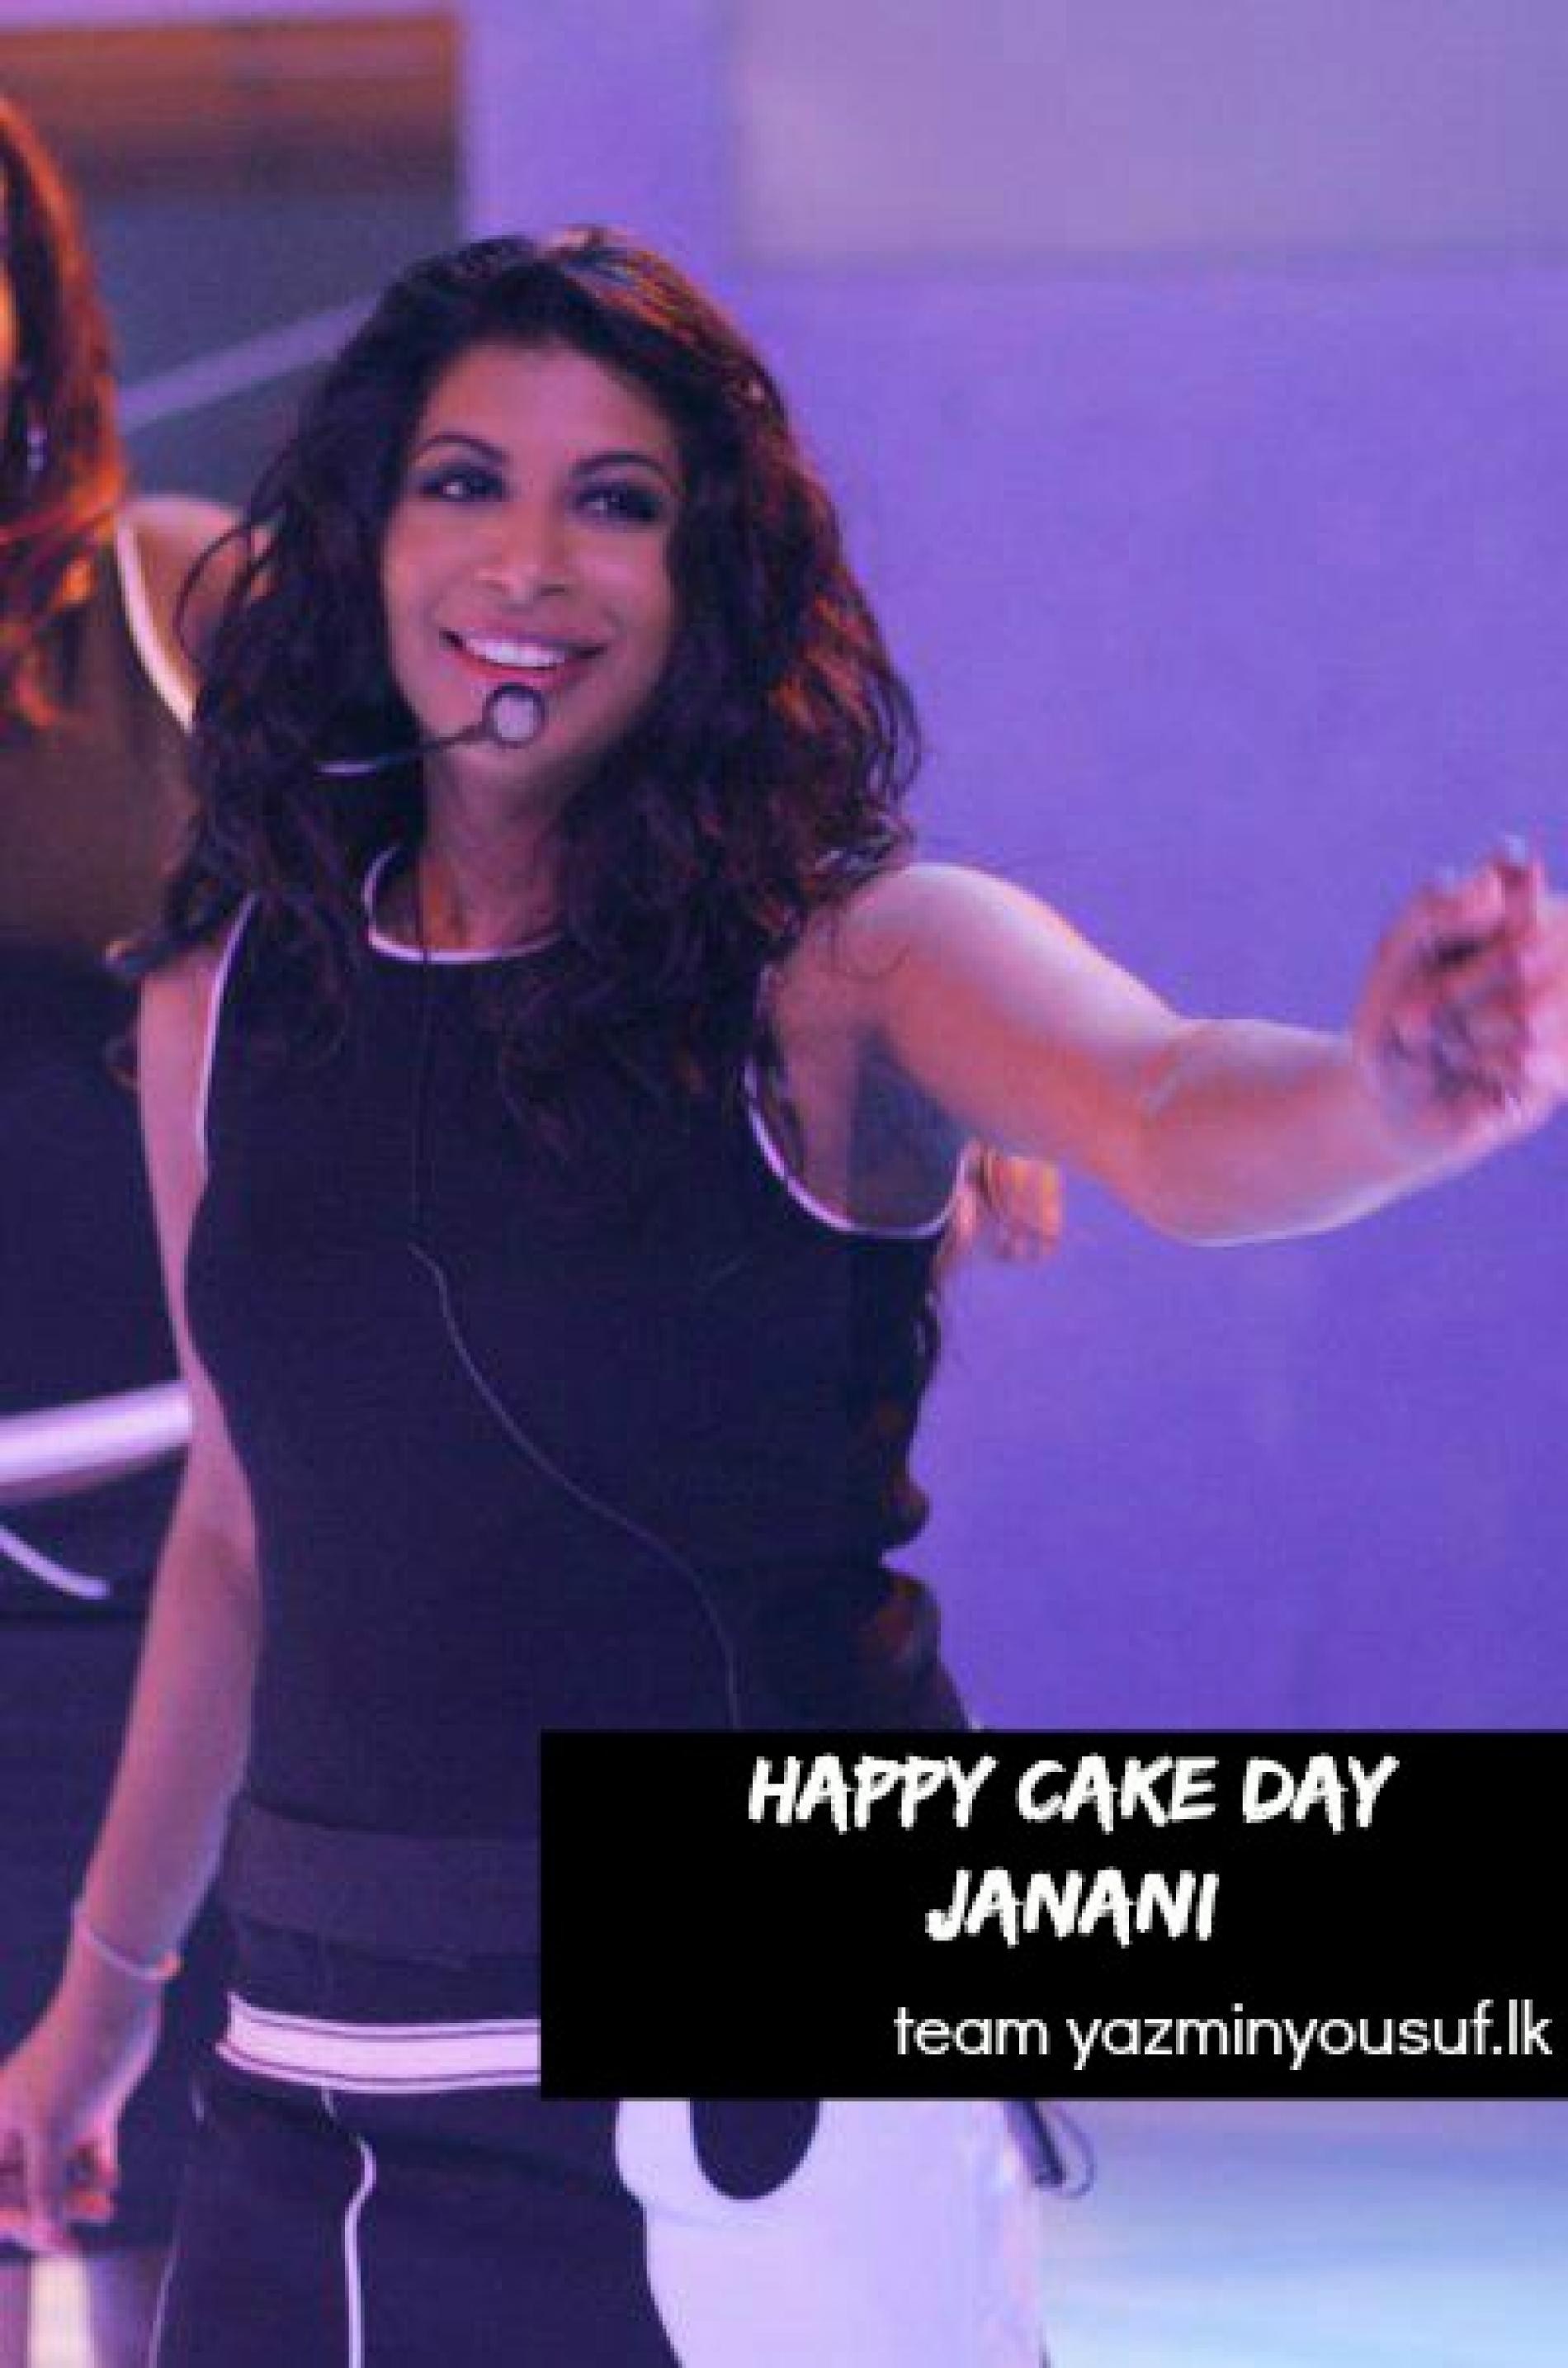 Happy Cake Day Janani